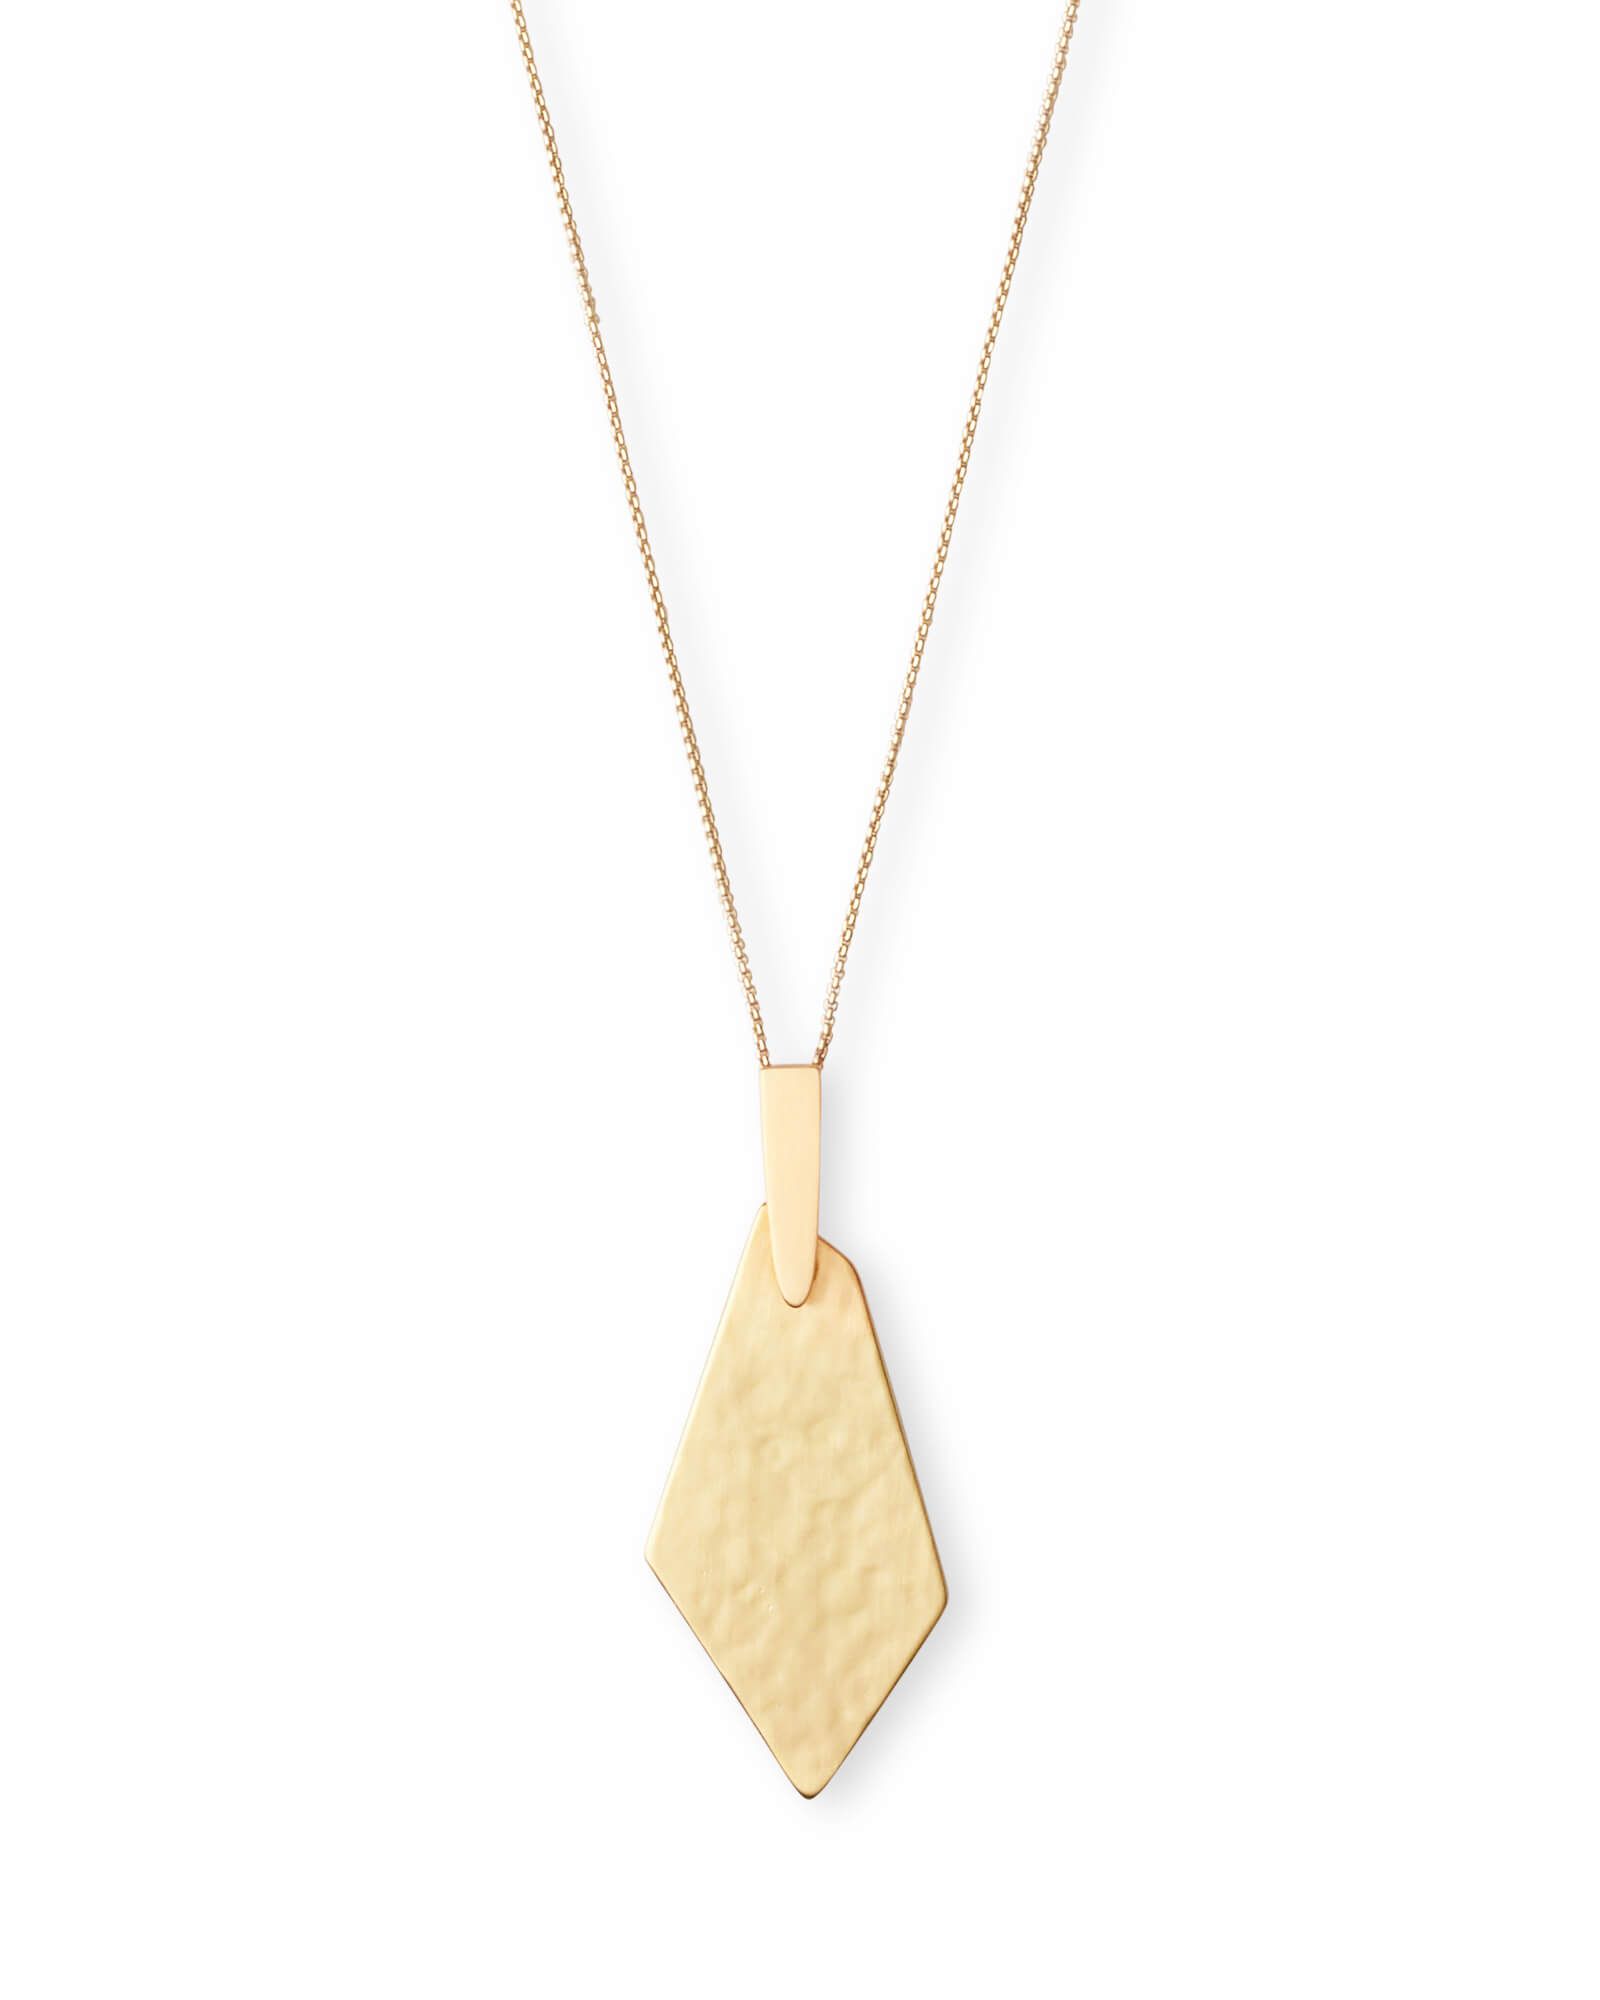 Brenton Long Pendant Necklace in Gold | Kendra Scott | Kendra Scott